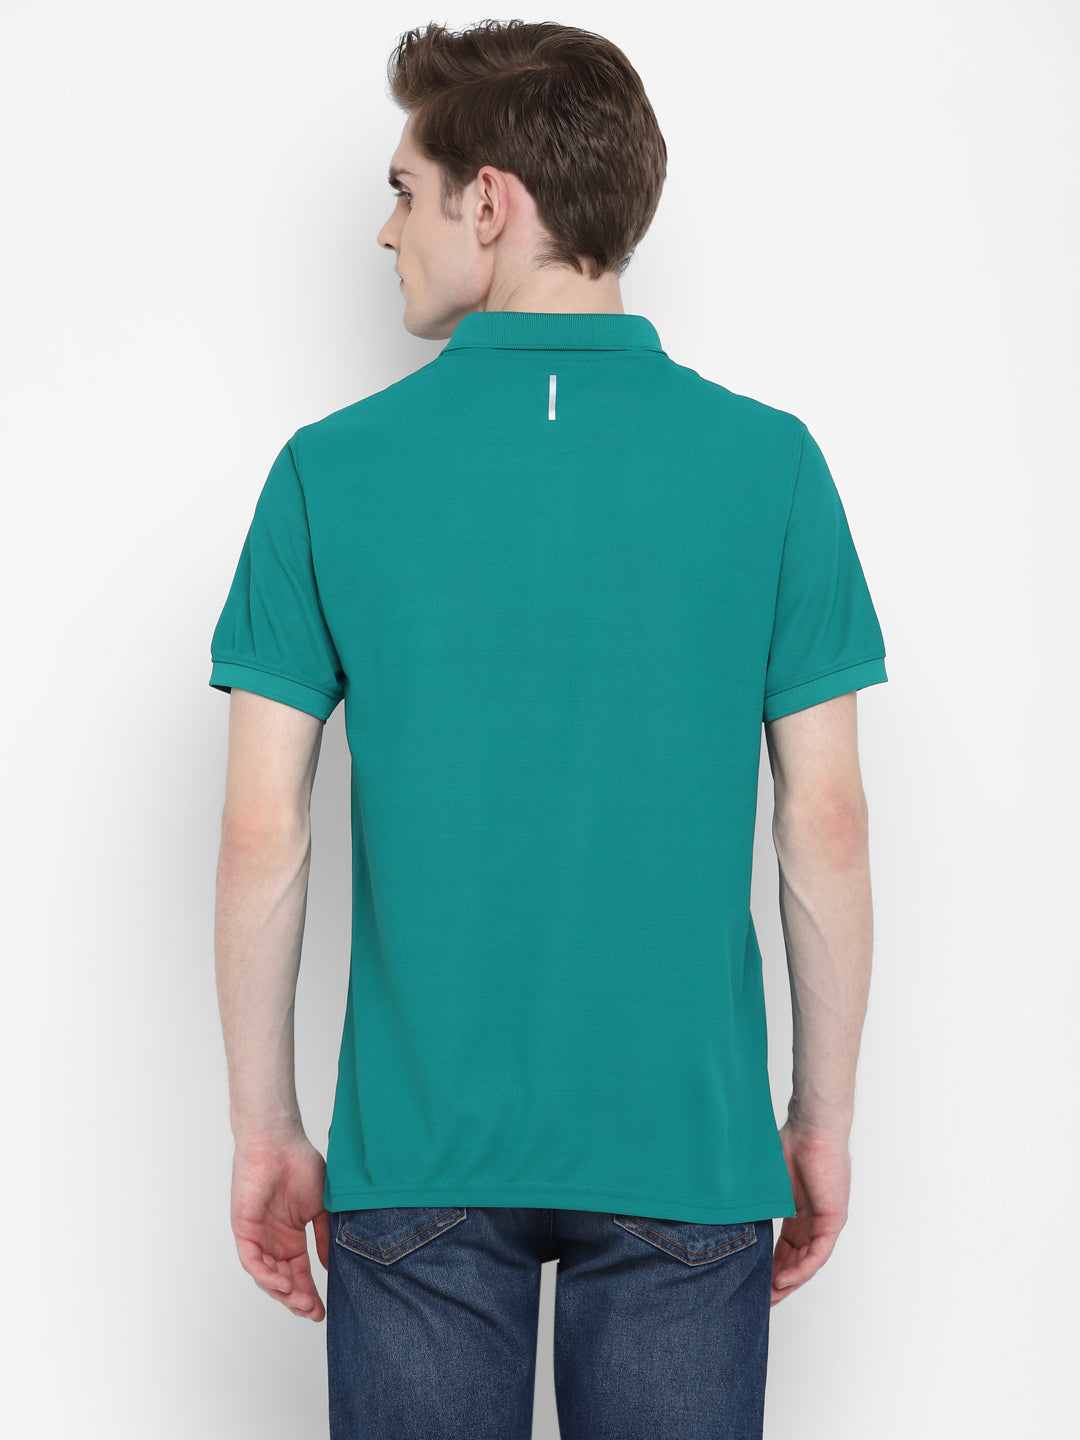 Kooltex Polo T-Shirt For Men - Sea Green